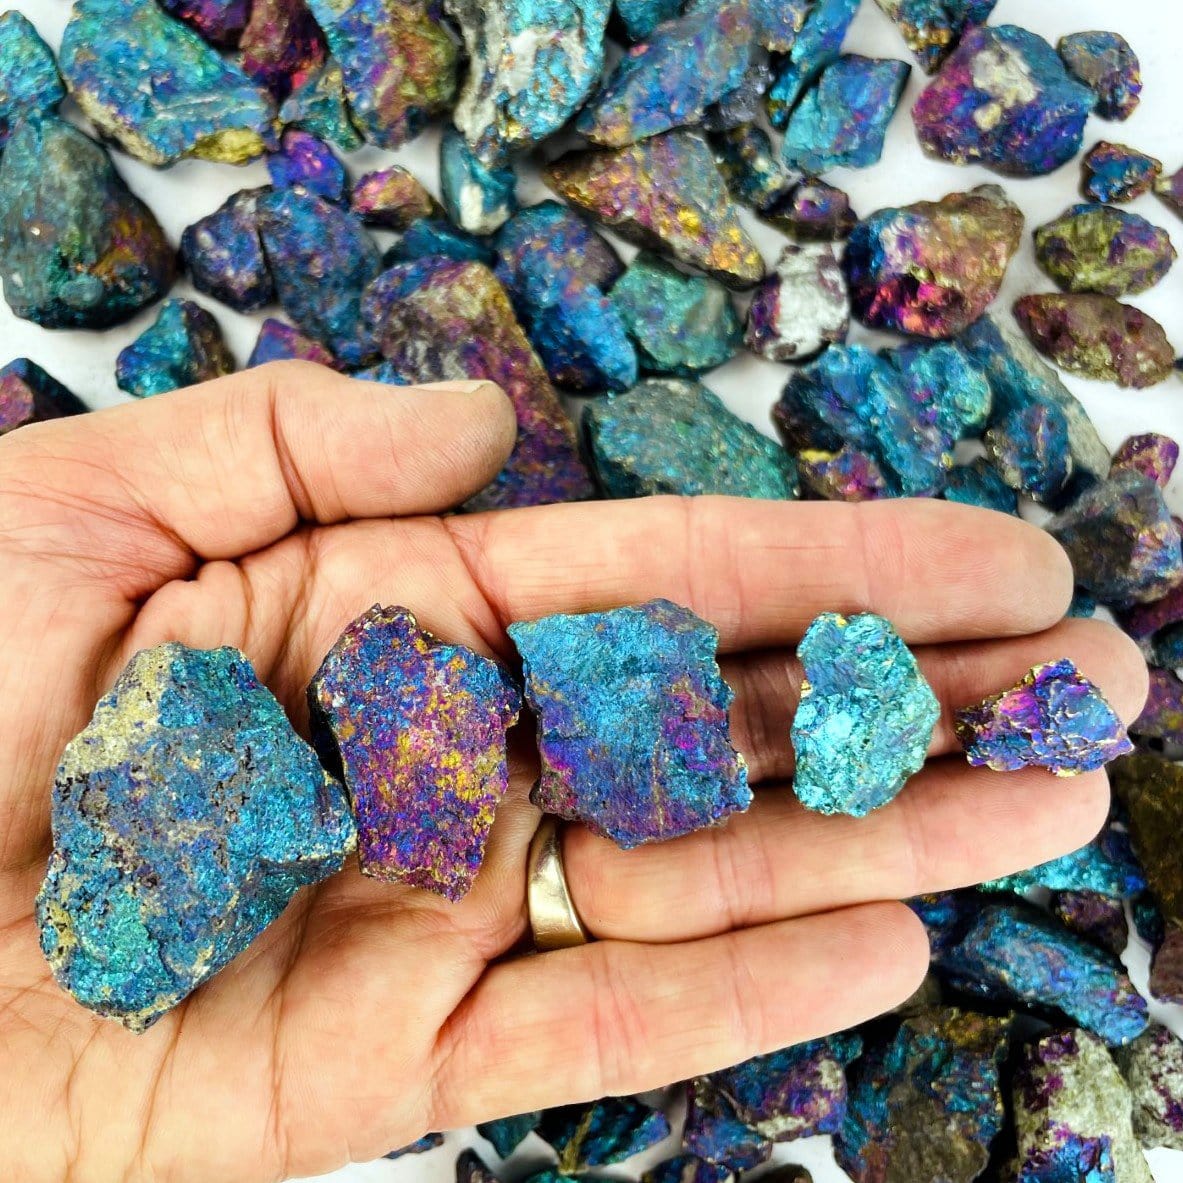 Five Peacock Ore stones in hand for size comparison